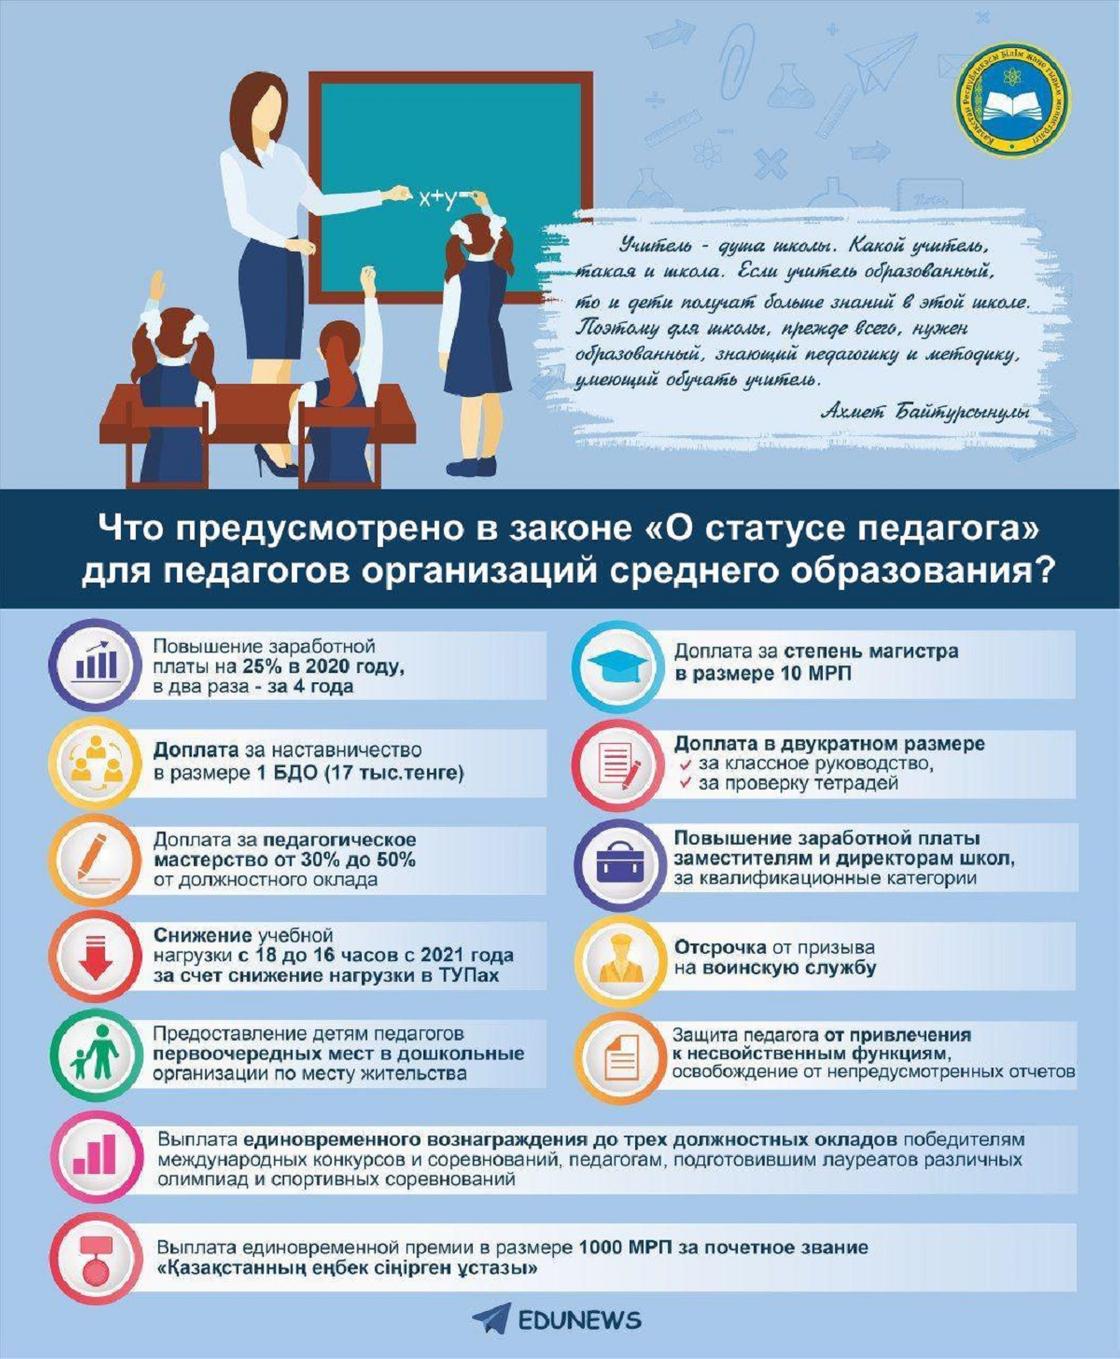 Что даст казахстанским учителям закон «О статусе педагога»